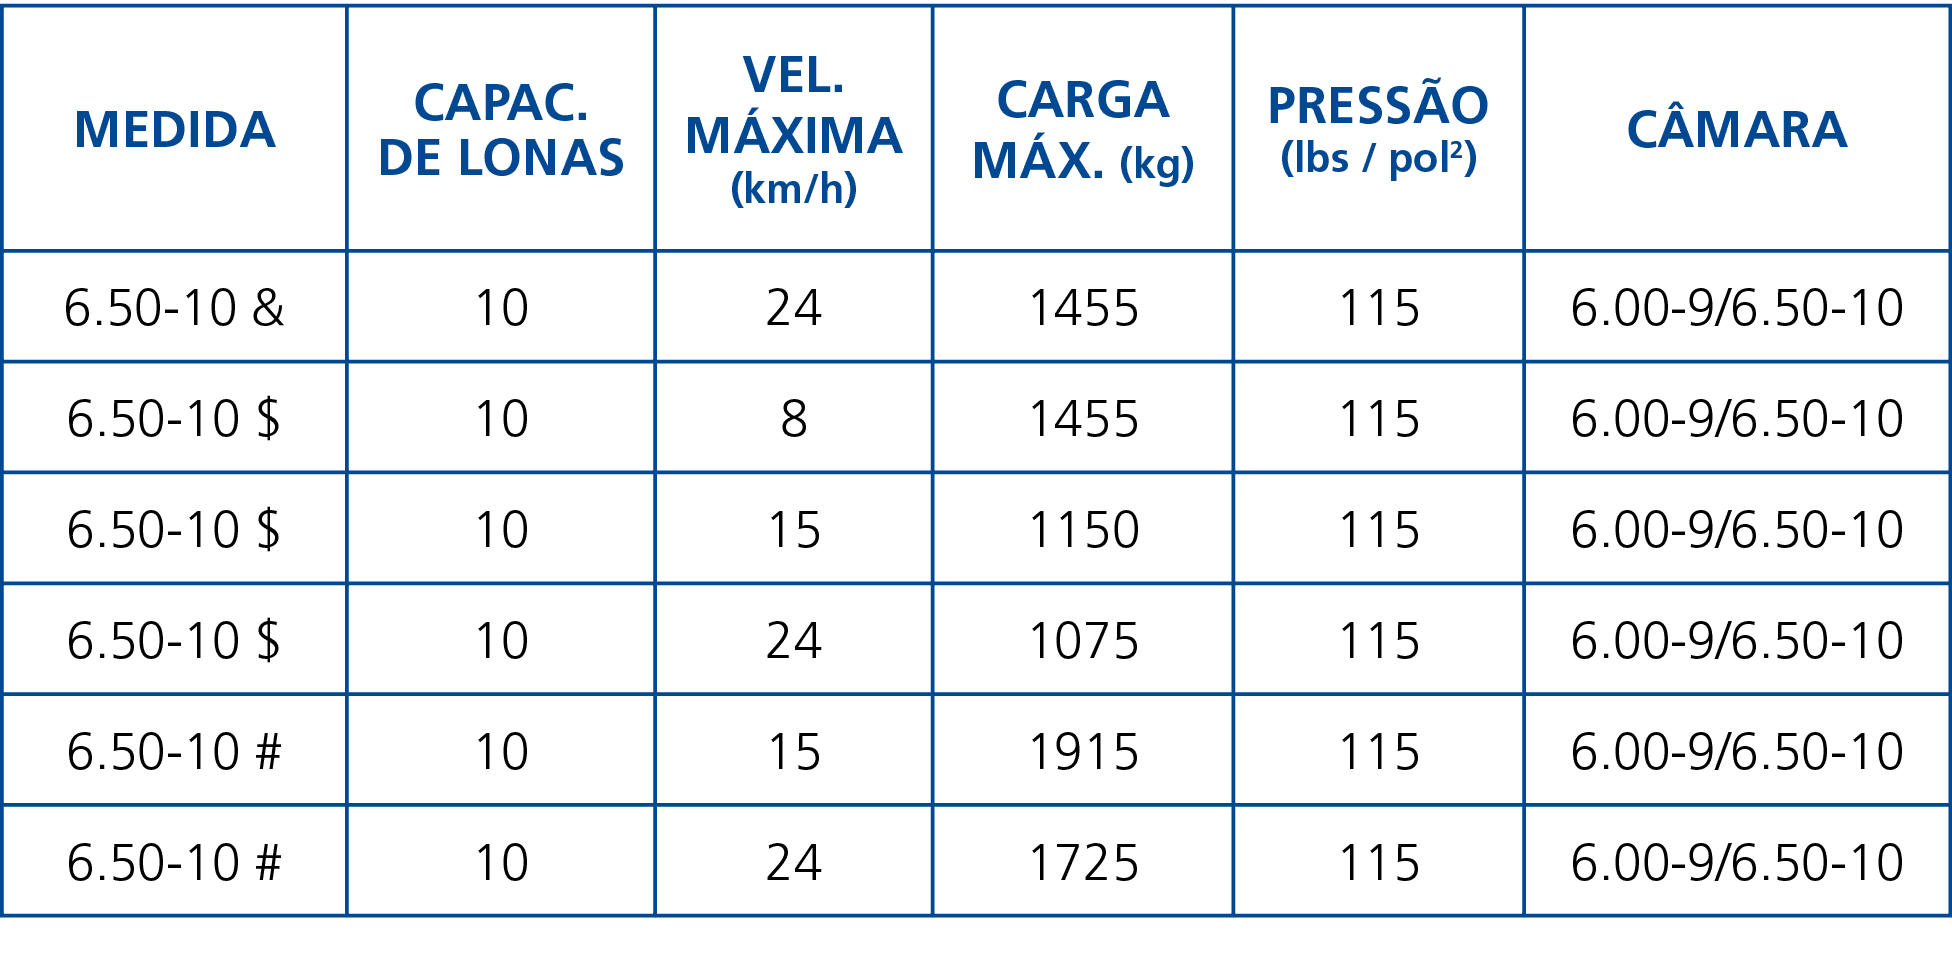 Medida,Capac  de Lonas,Vel  Máxima (km h),Carga Máx  (kg),Pressão (lbs   pol2),Câmara,6 50-10 & ,10 ,24 ,1455 ,115 ,6   